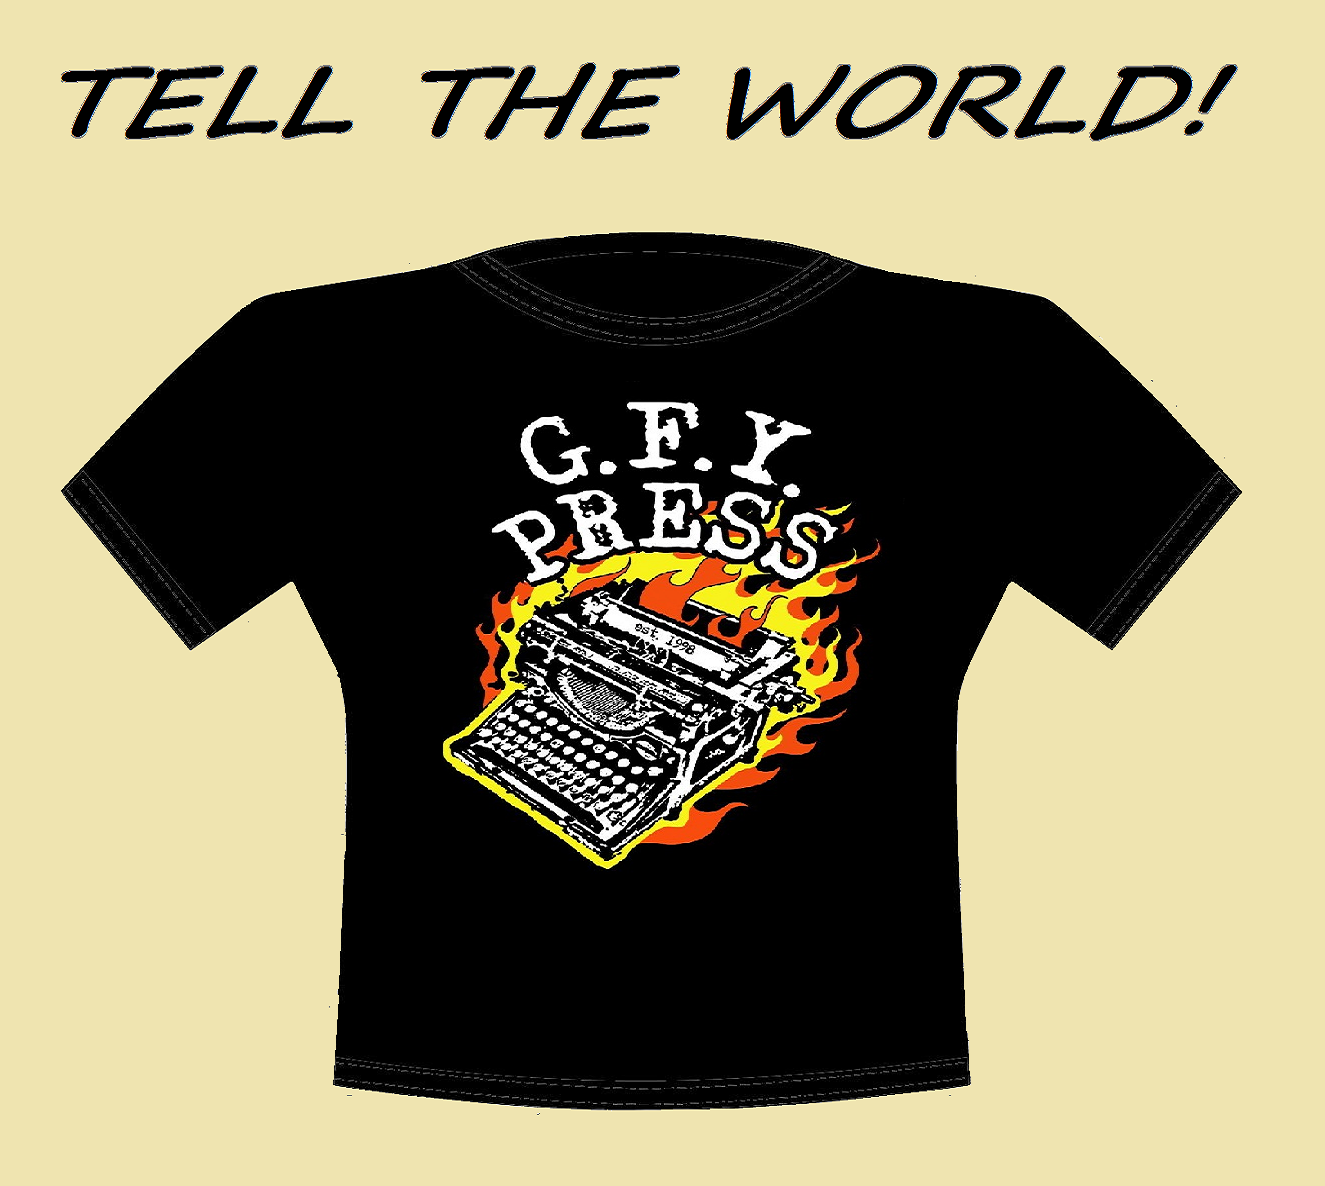 Get Yer Own GFY Press T-Shirt